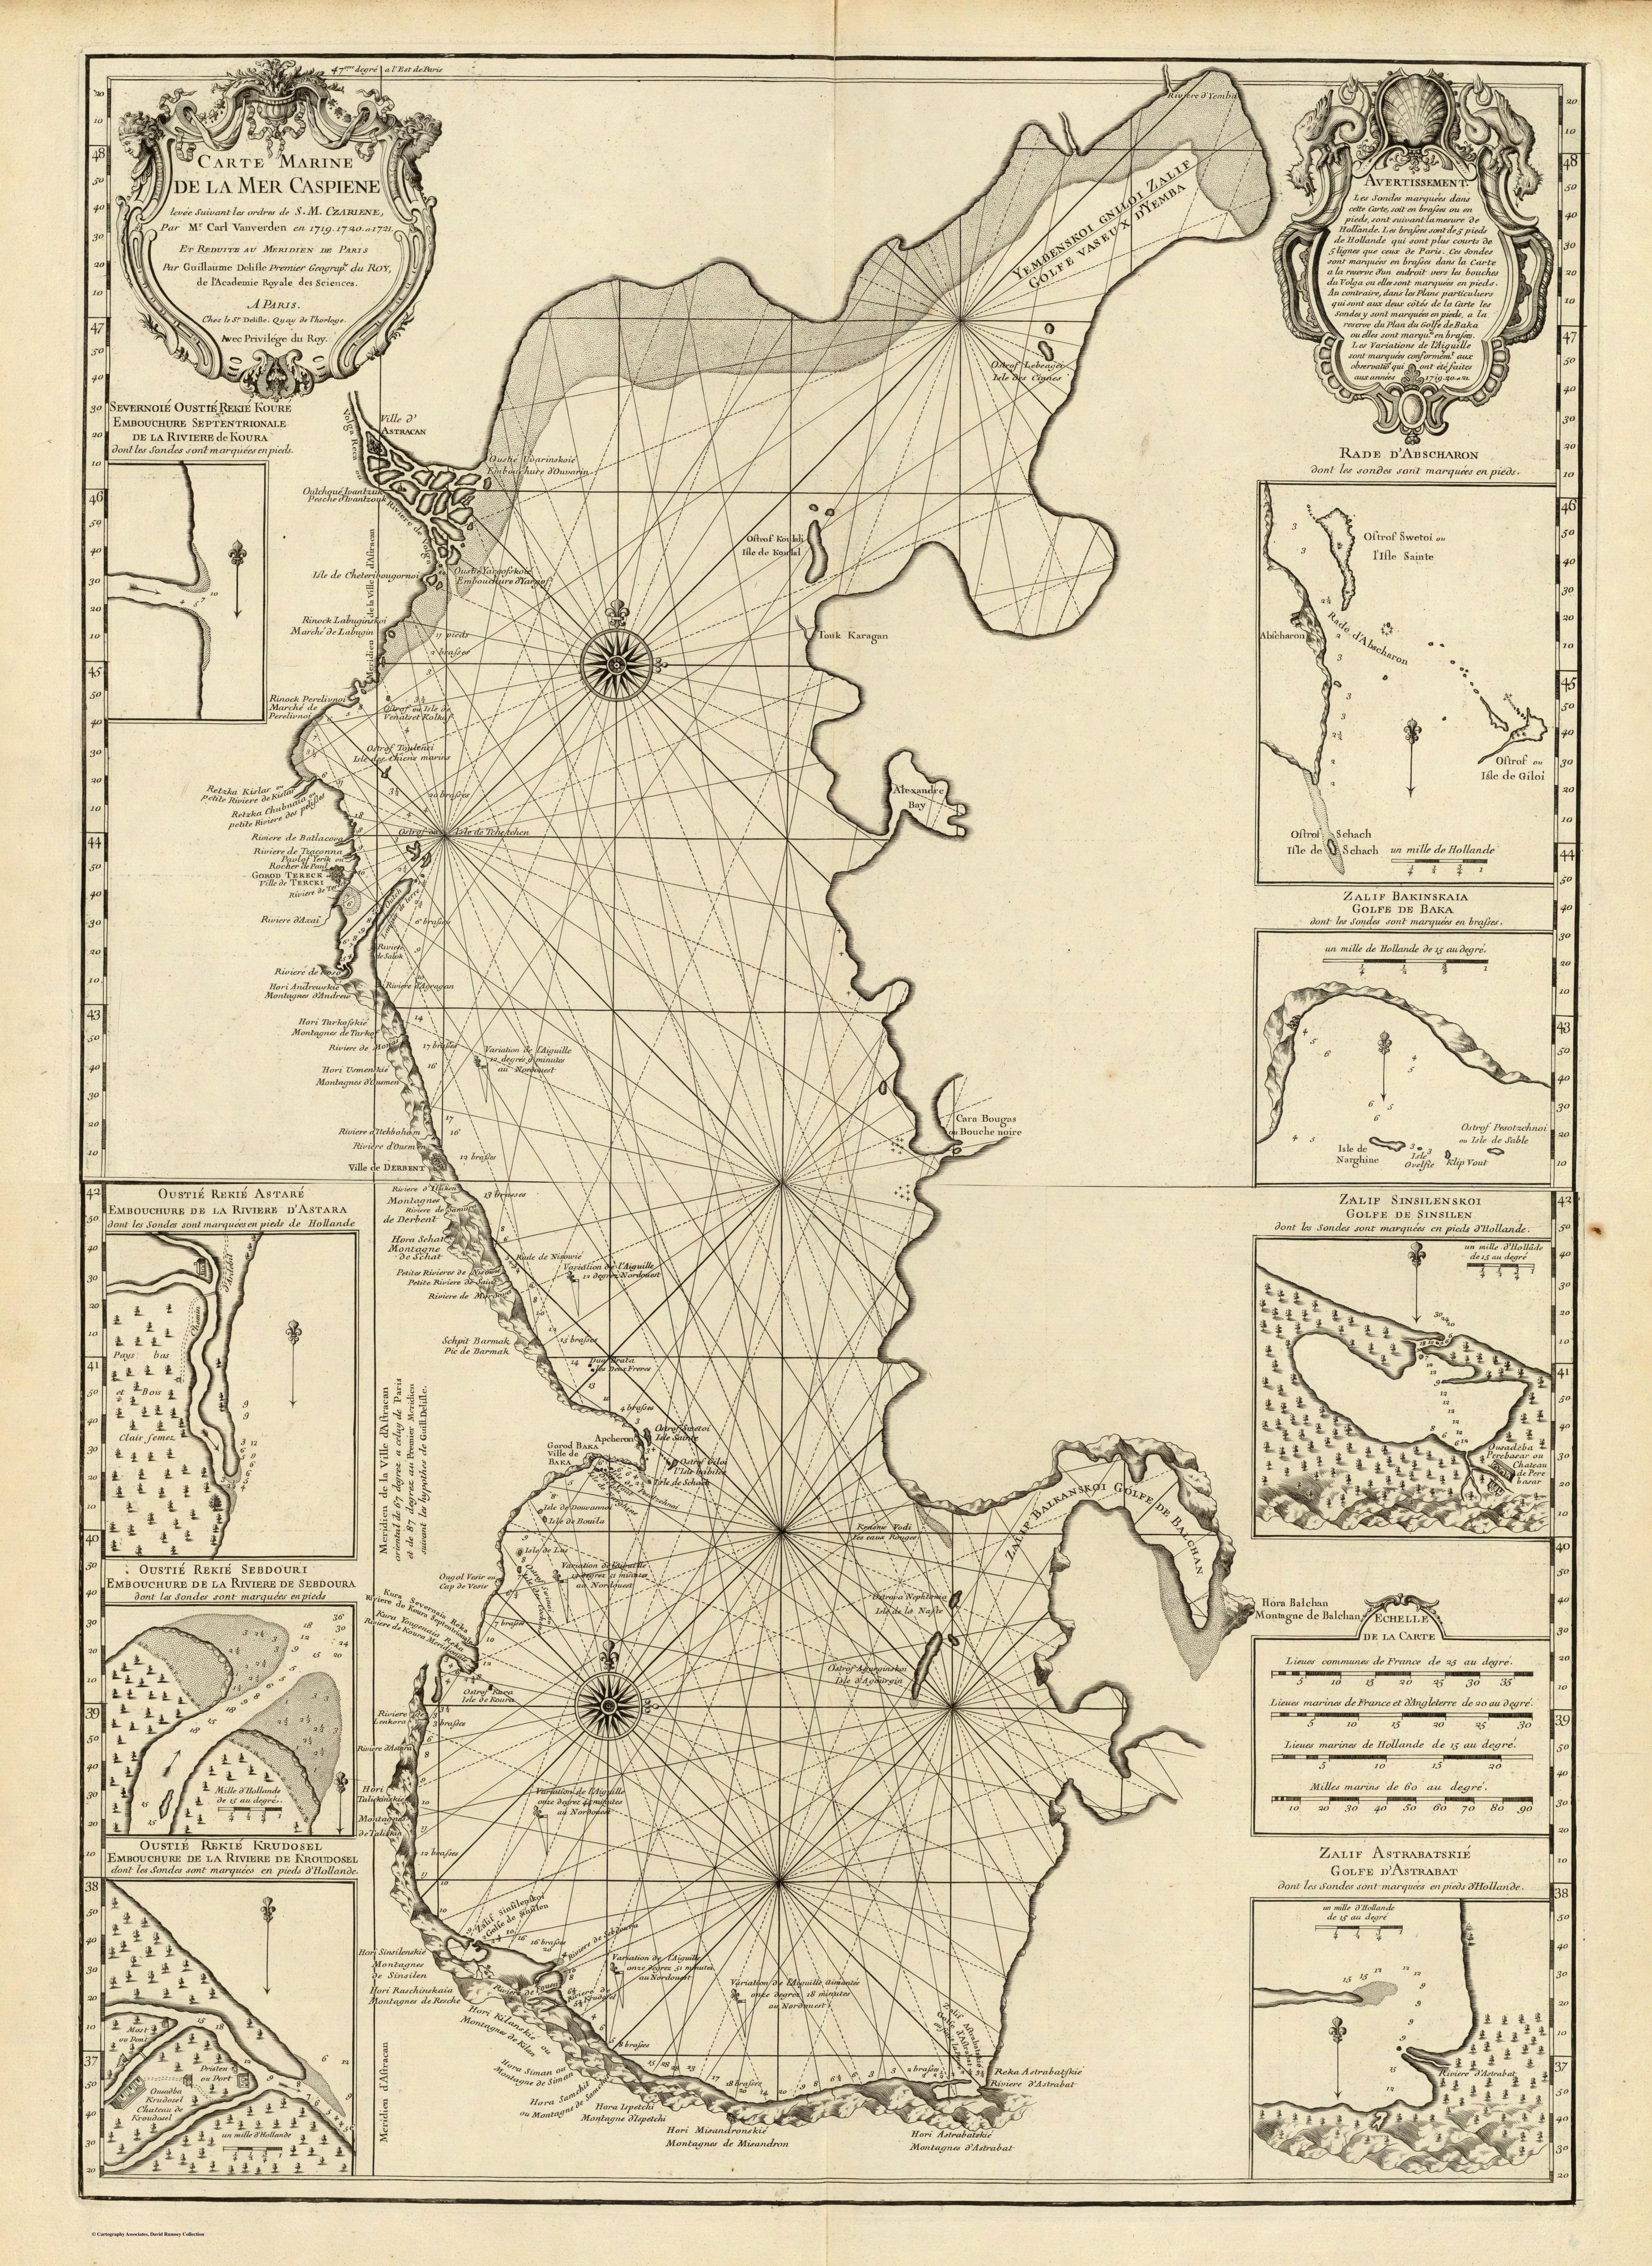 Lisle, Guillaume de; Verden, Carl van. Composite- Mer Caspiene carte marine. 1721